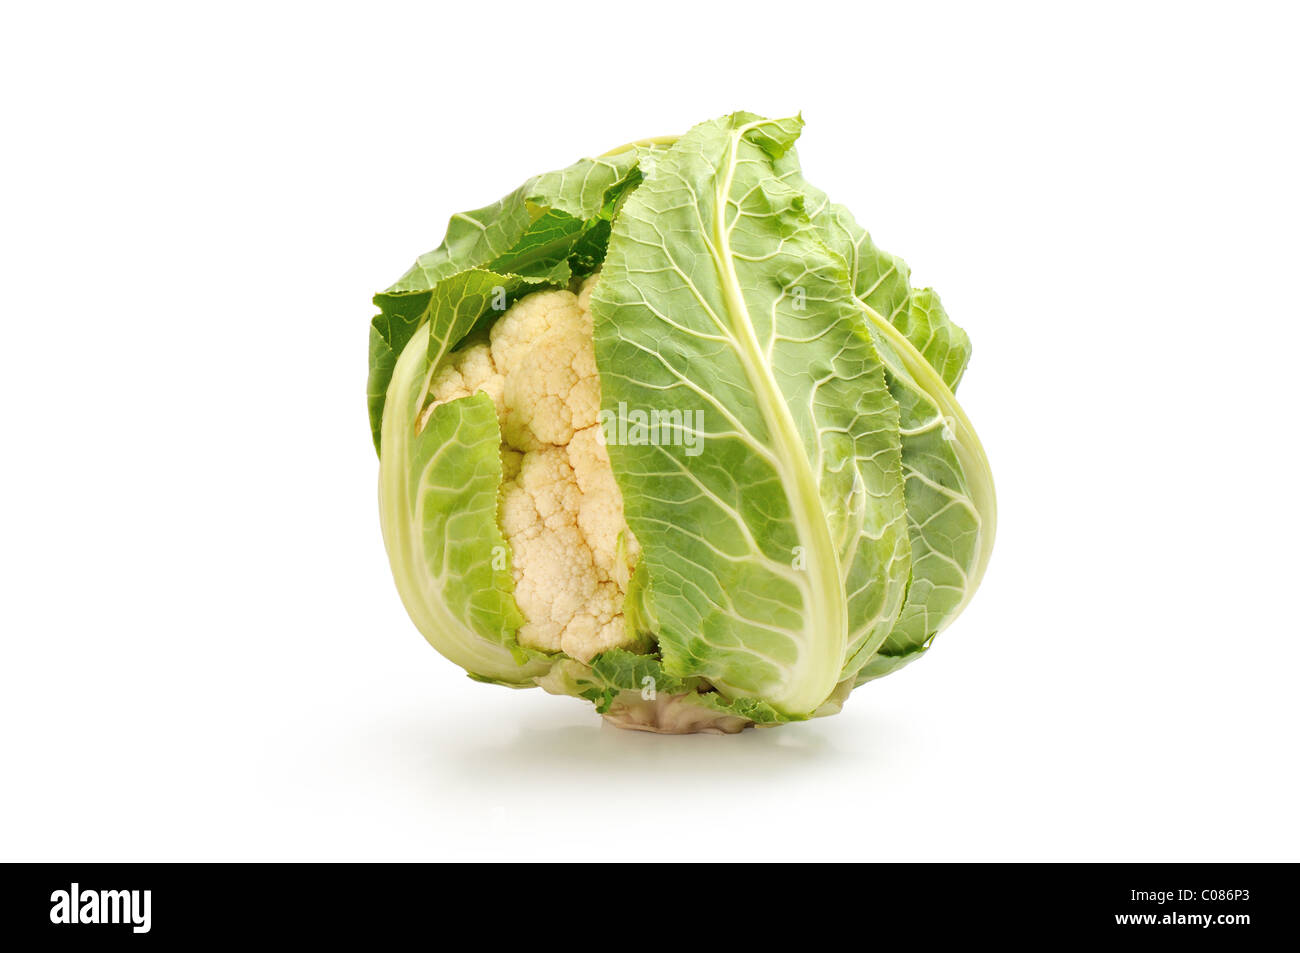 cauliflower on a white background Stock Photo